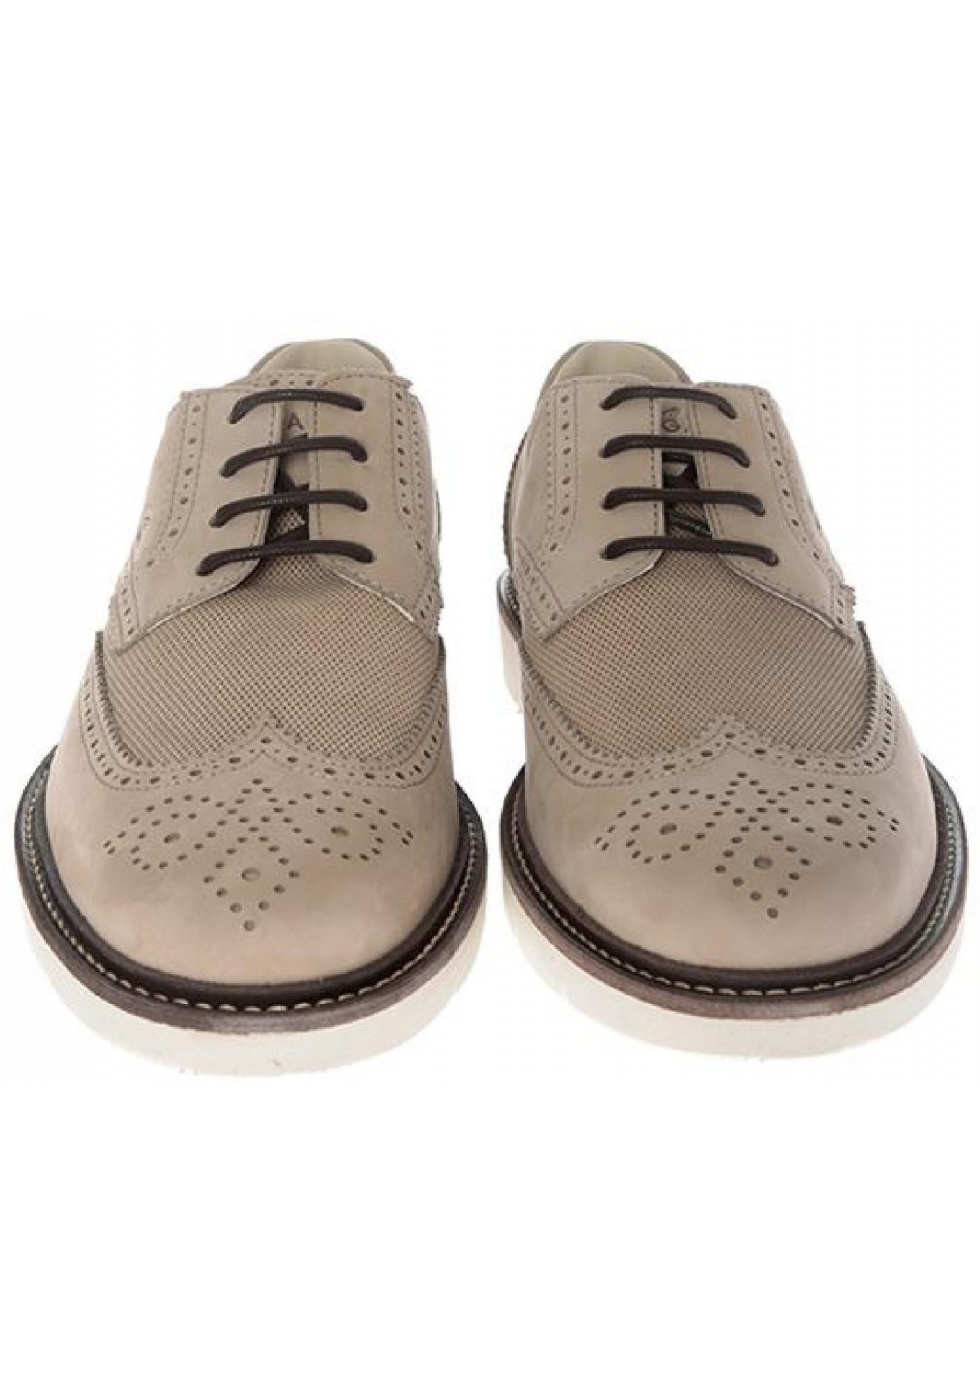 Hogan men's derby brogues lace-up shoes in beige suede - Italian Boutique